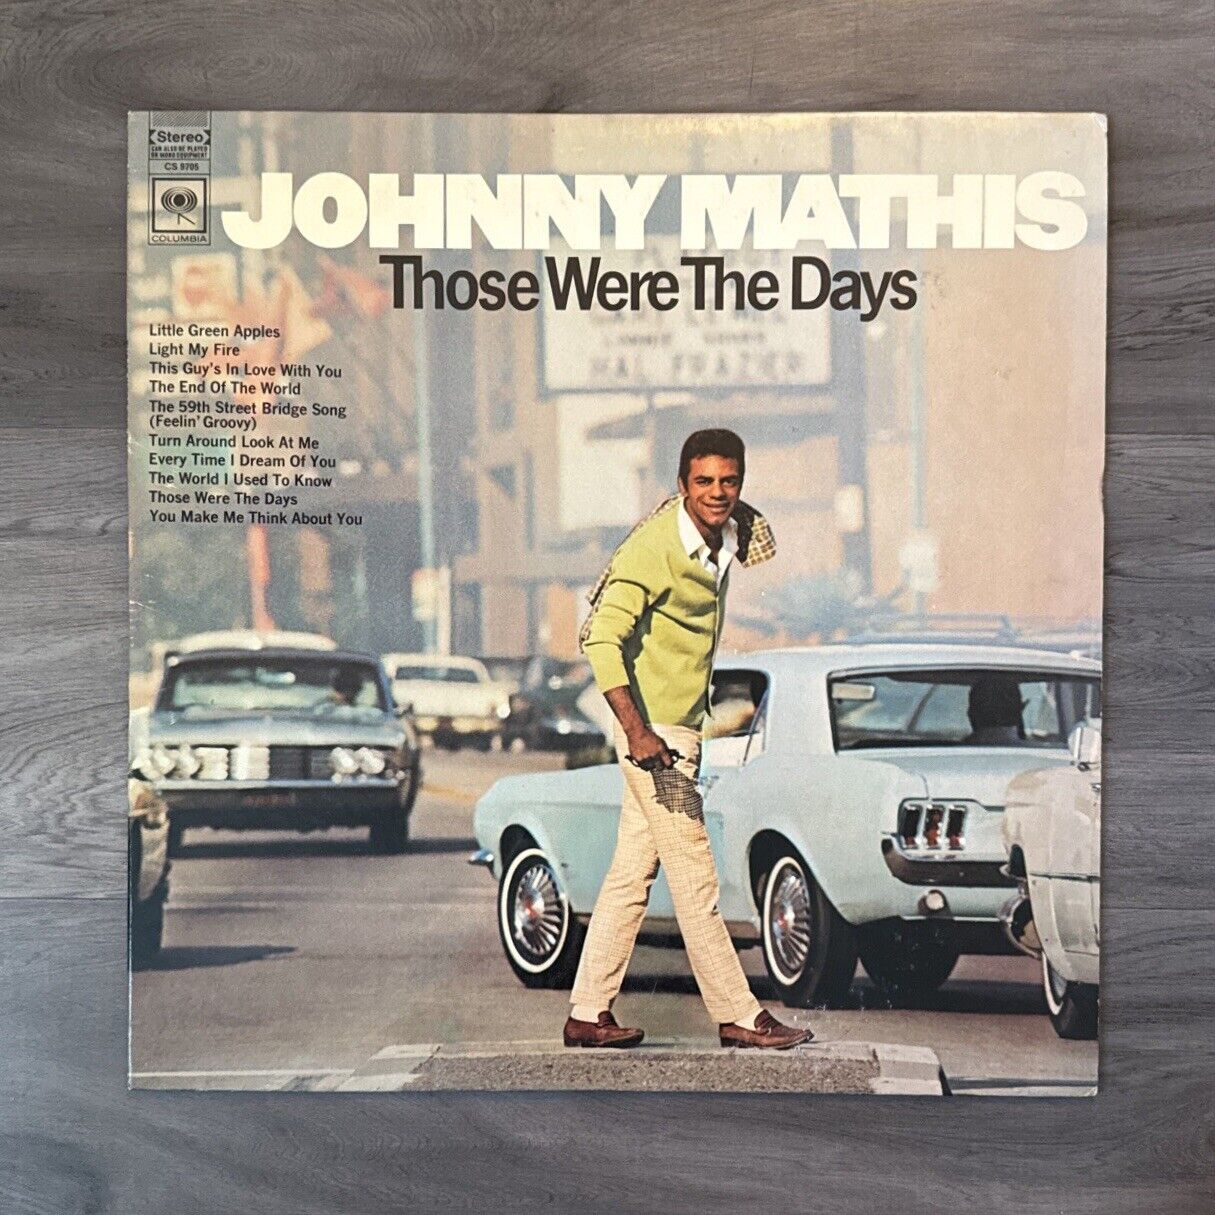 Johnny Mathis ‎– Those Were The Days LP 1968 - Columbia ‎CS 9705 VINYL RECORD